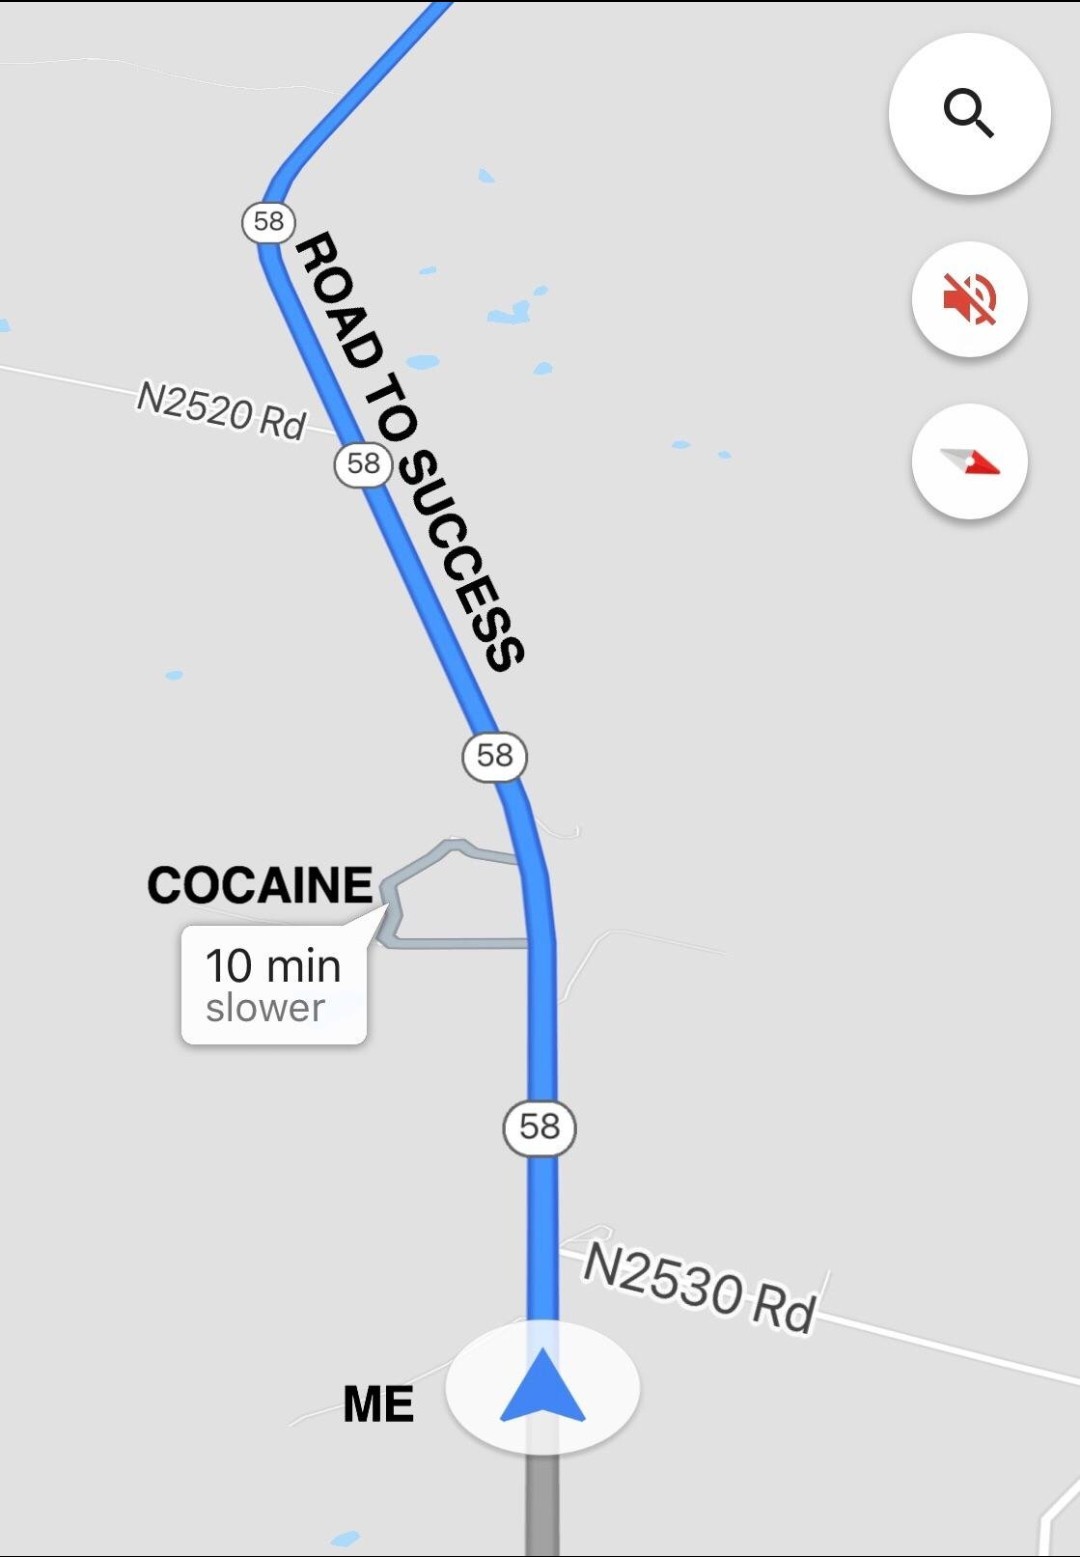 Cocaine - meme